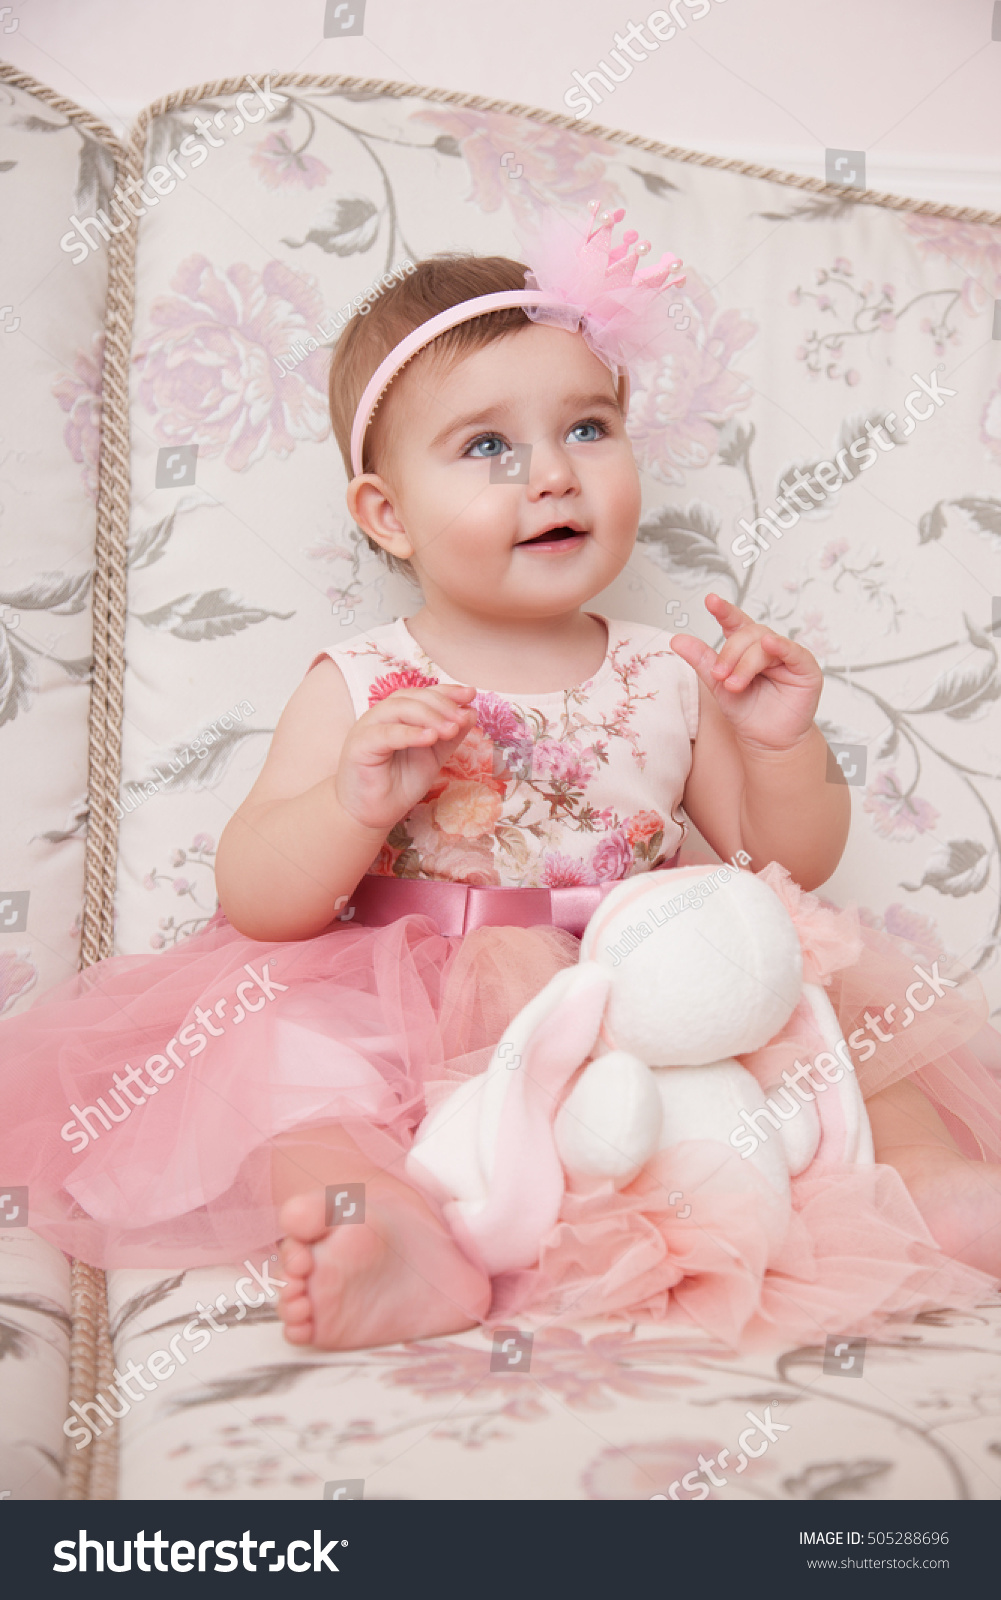 cute baby girl in pink dress